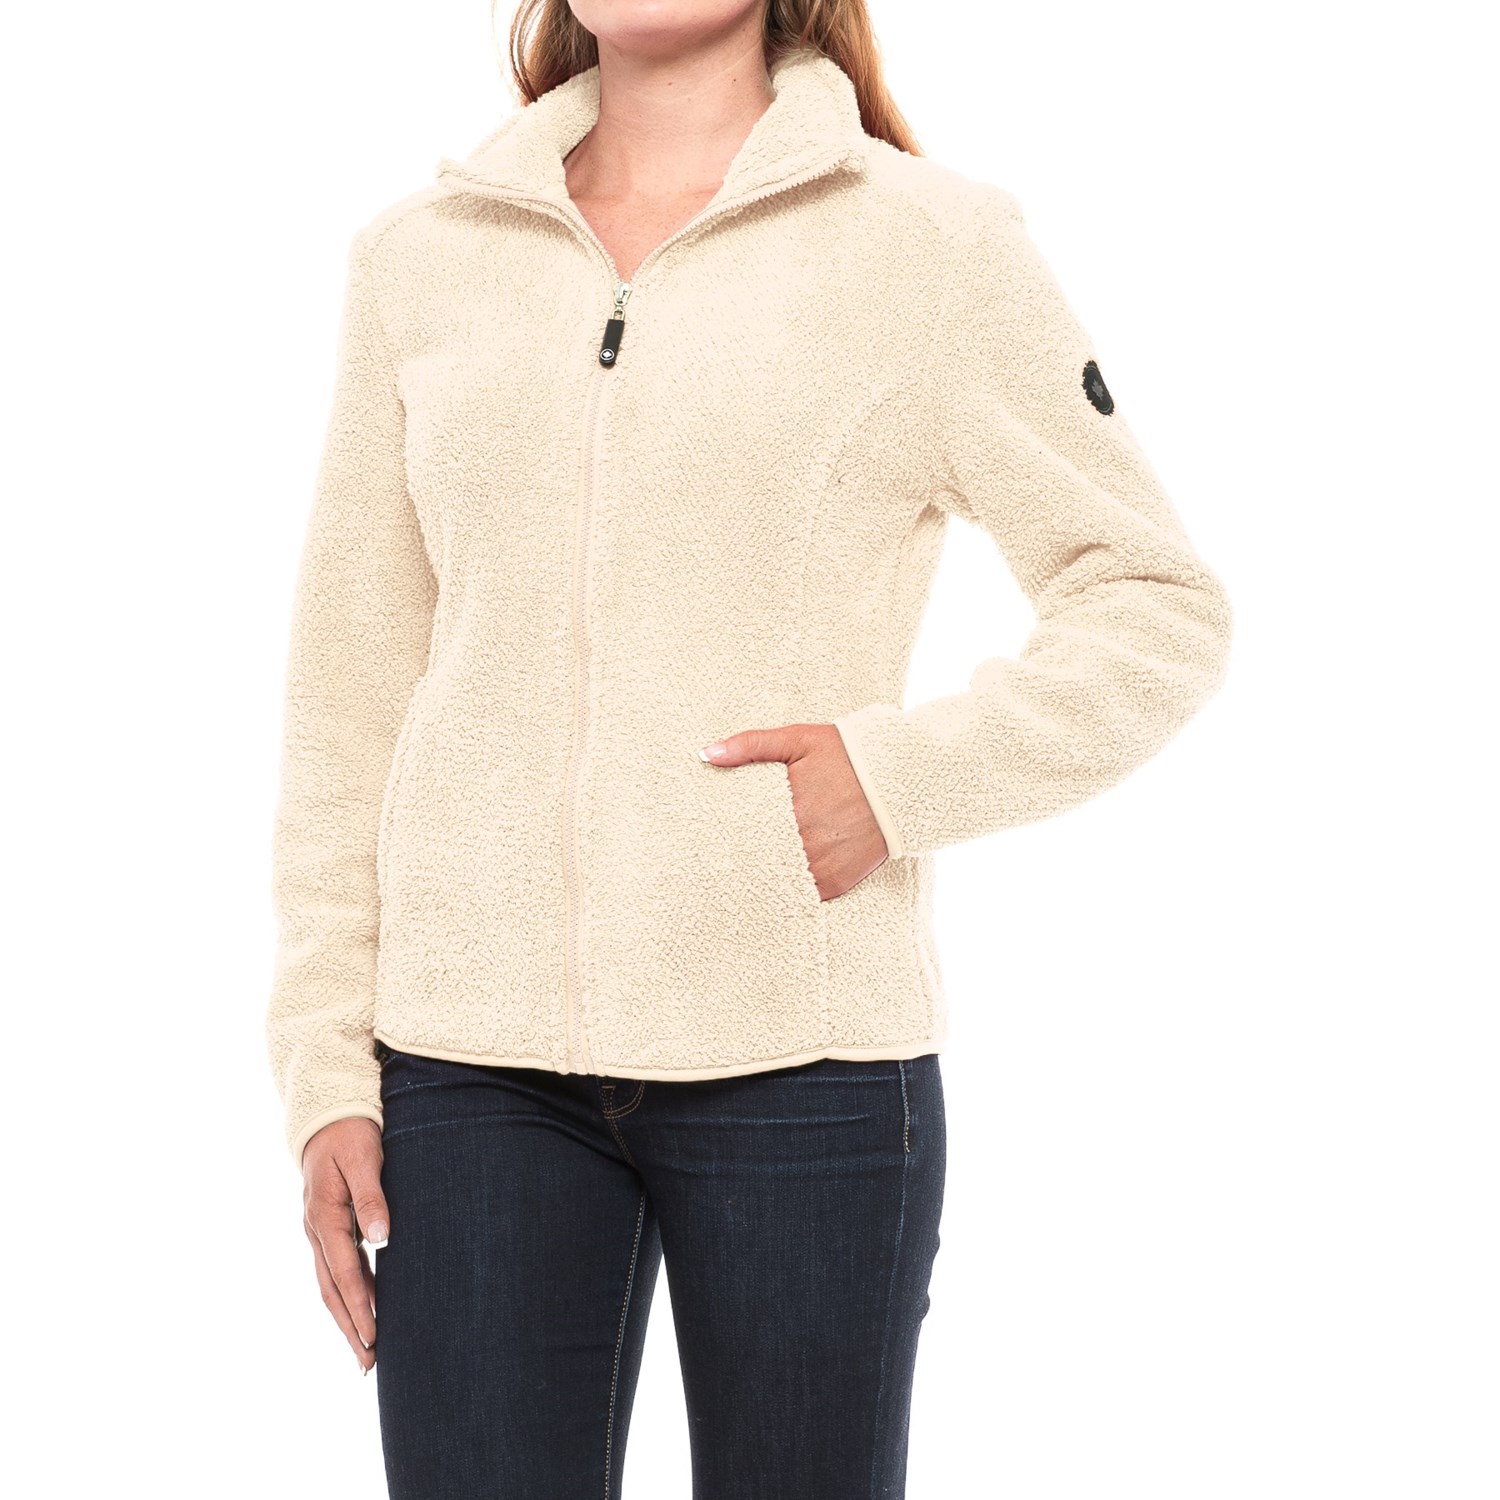 HFX Sherpa Fleece Jacket (For Women) - Save 66%